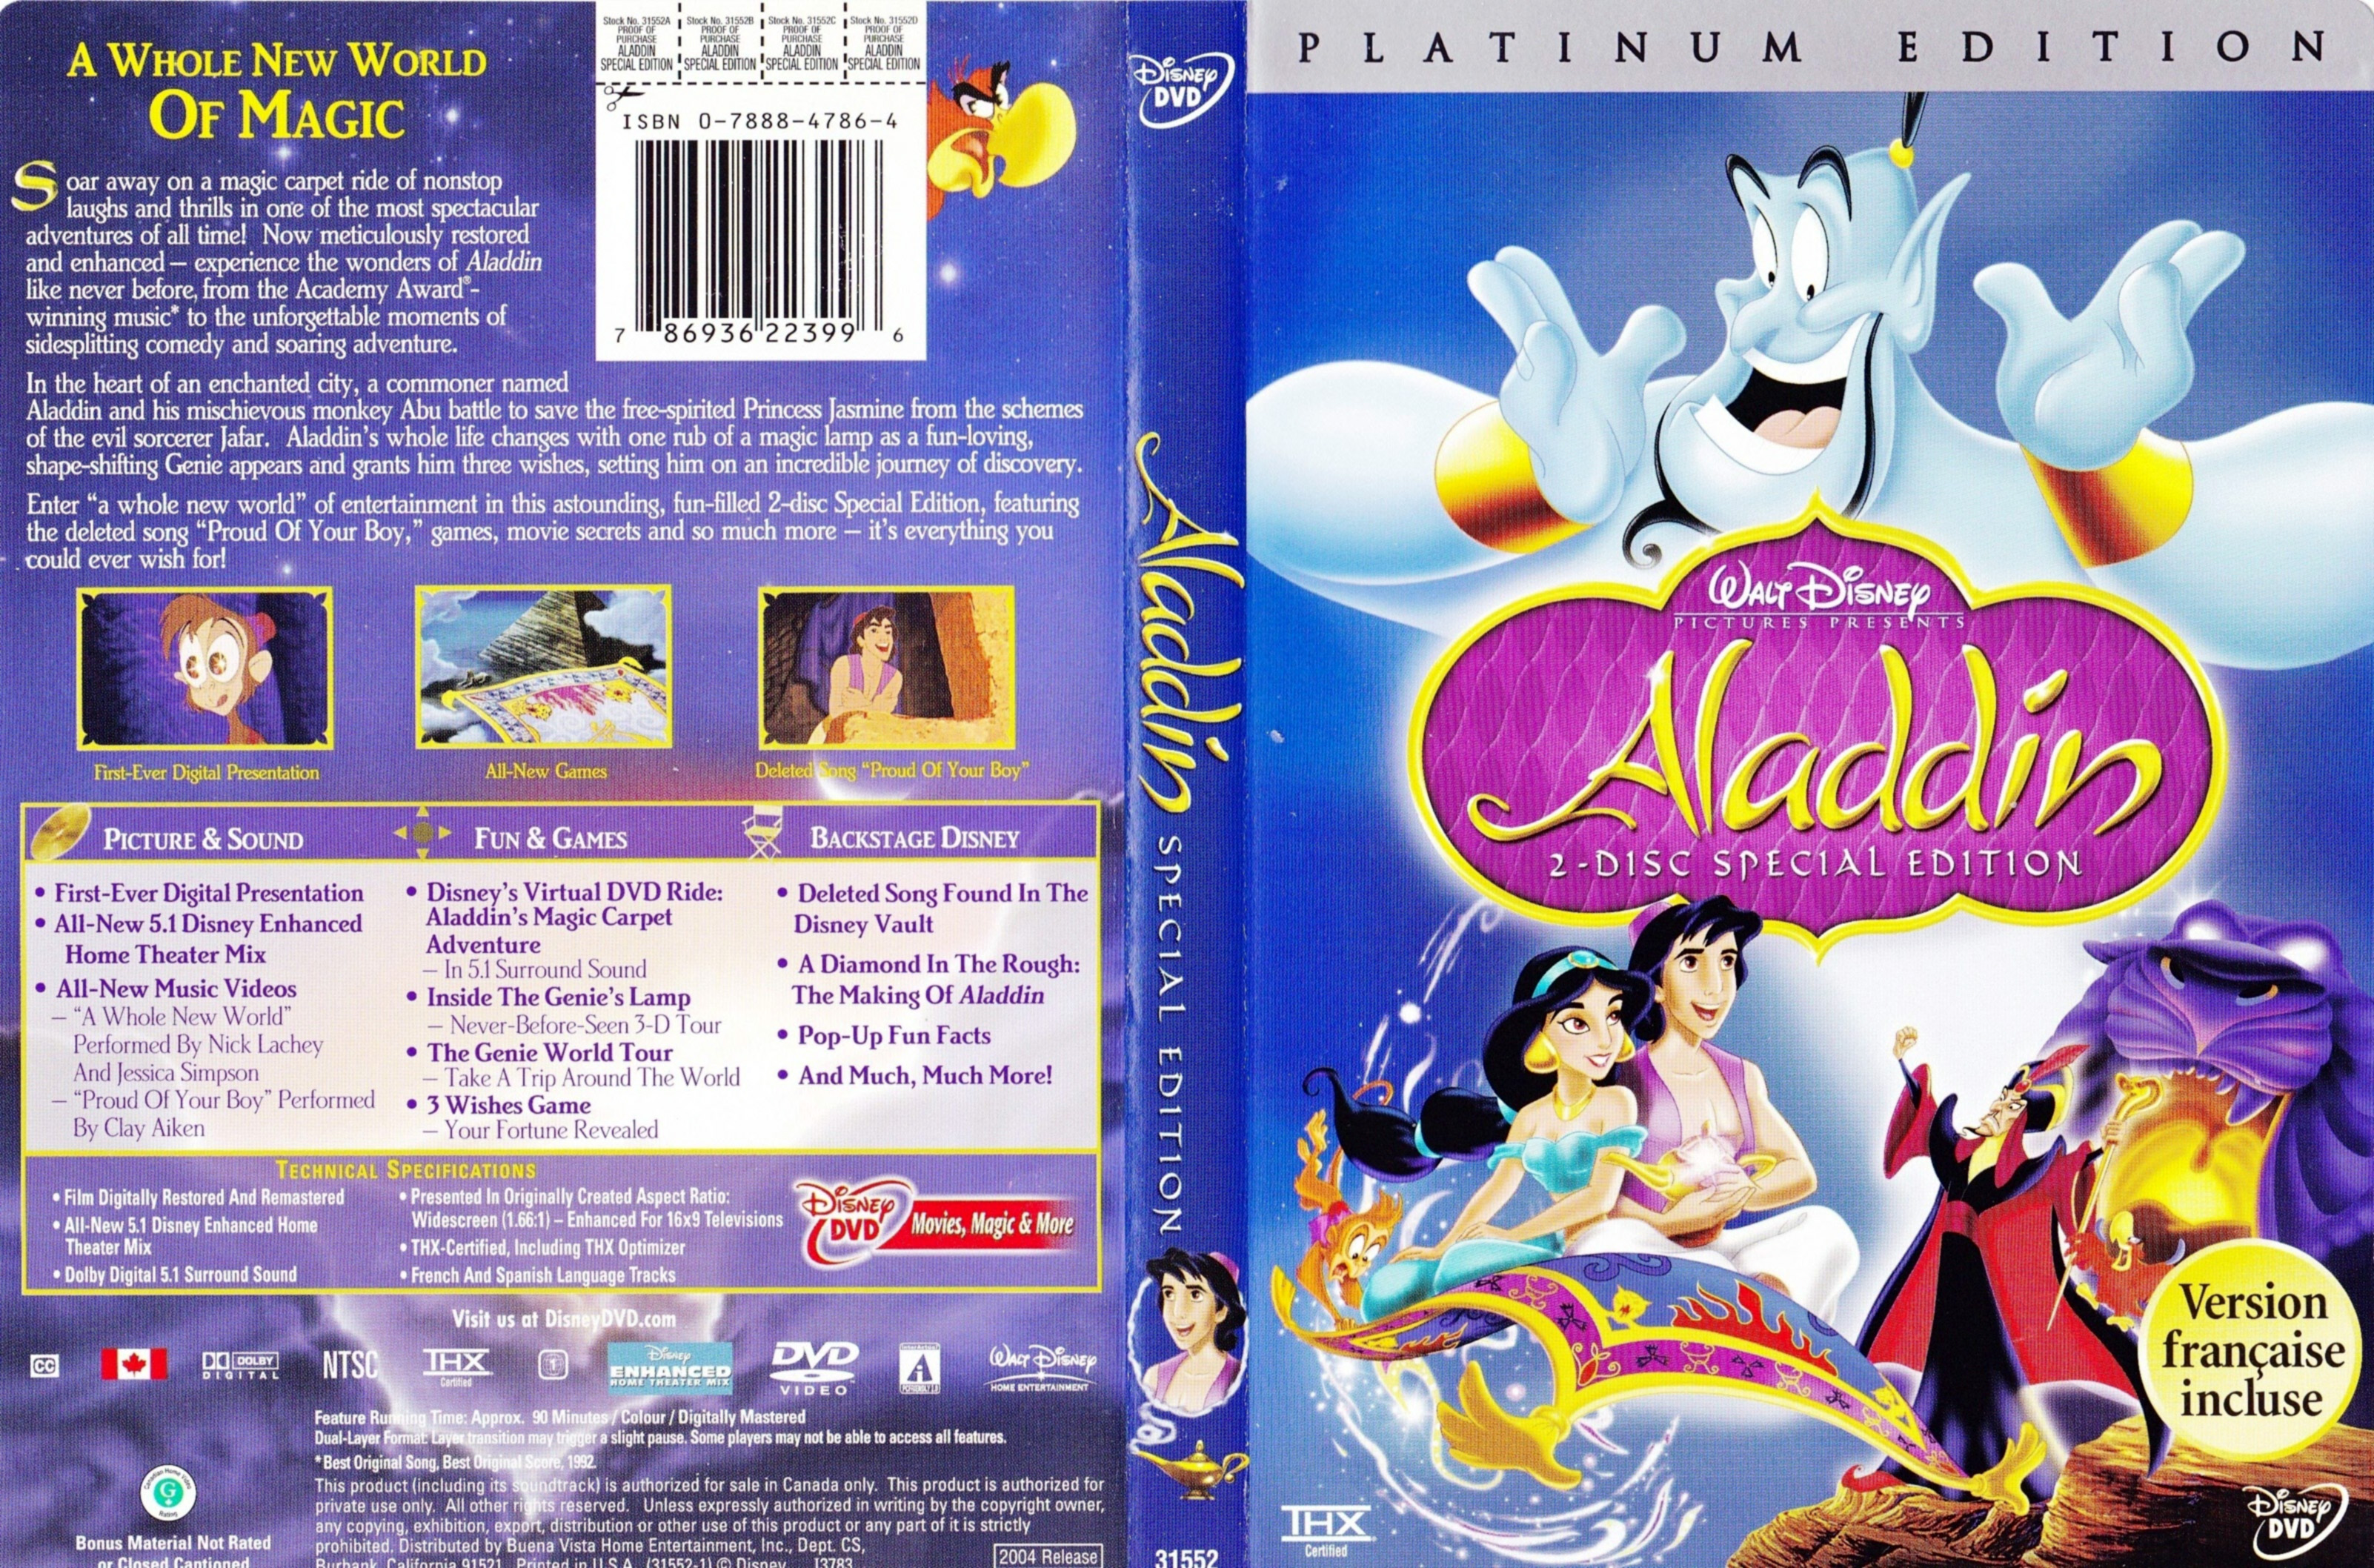 Jaquette DVD Aladdin (Canadienne)